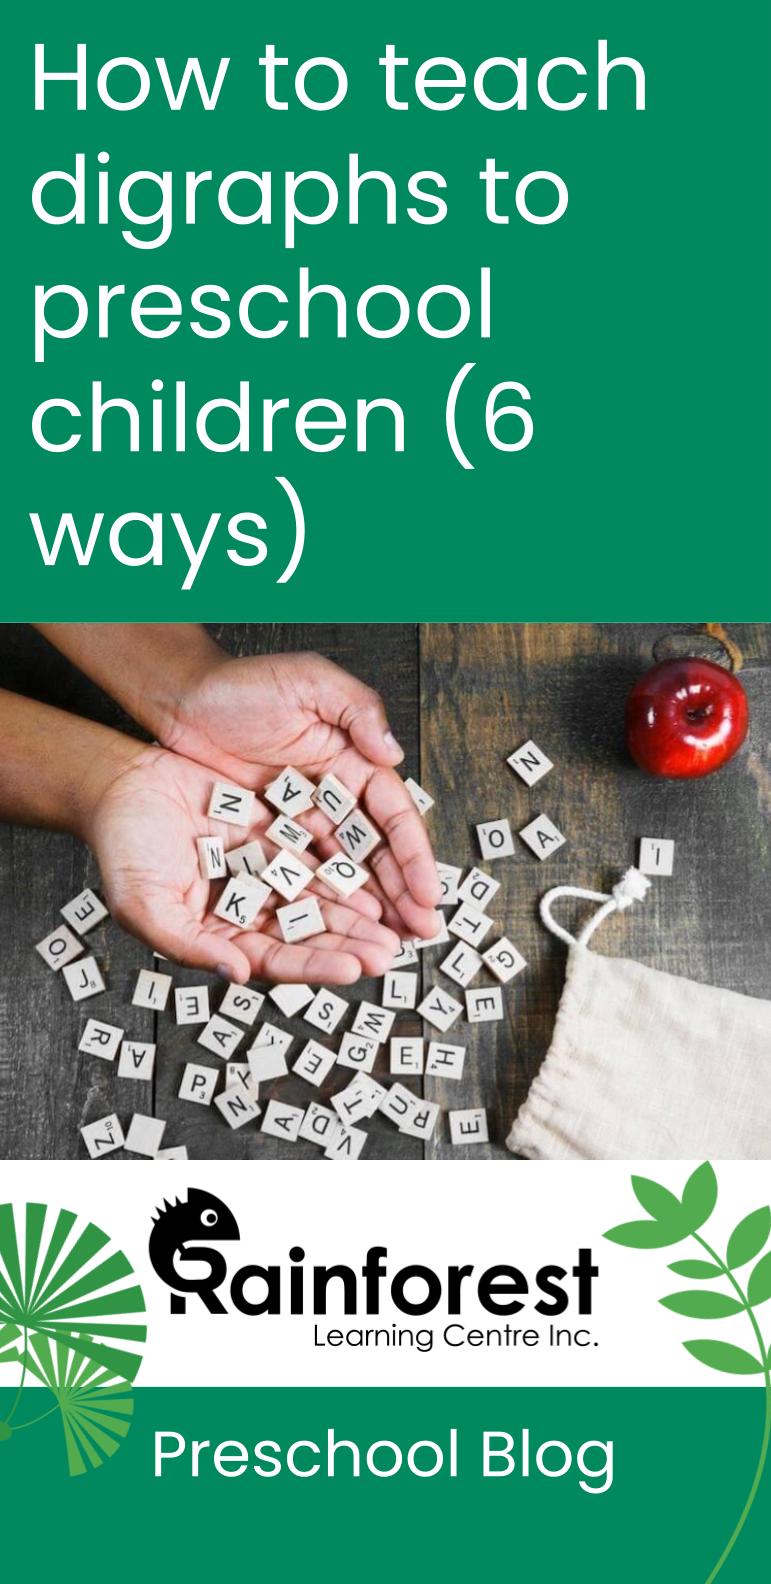 how to teach digraphs to preschool children in 6 ways - blog pinterest image